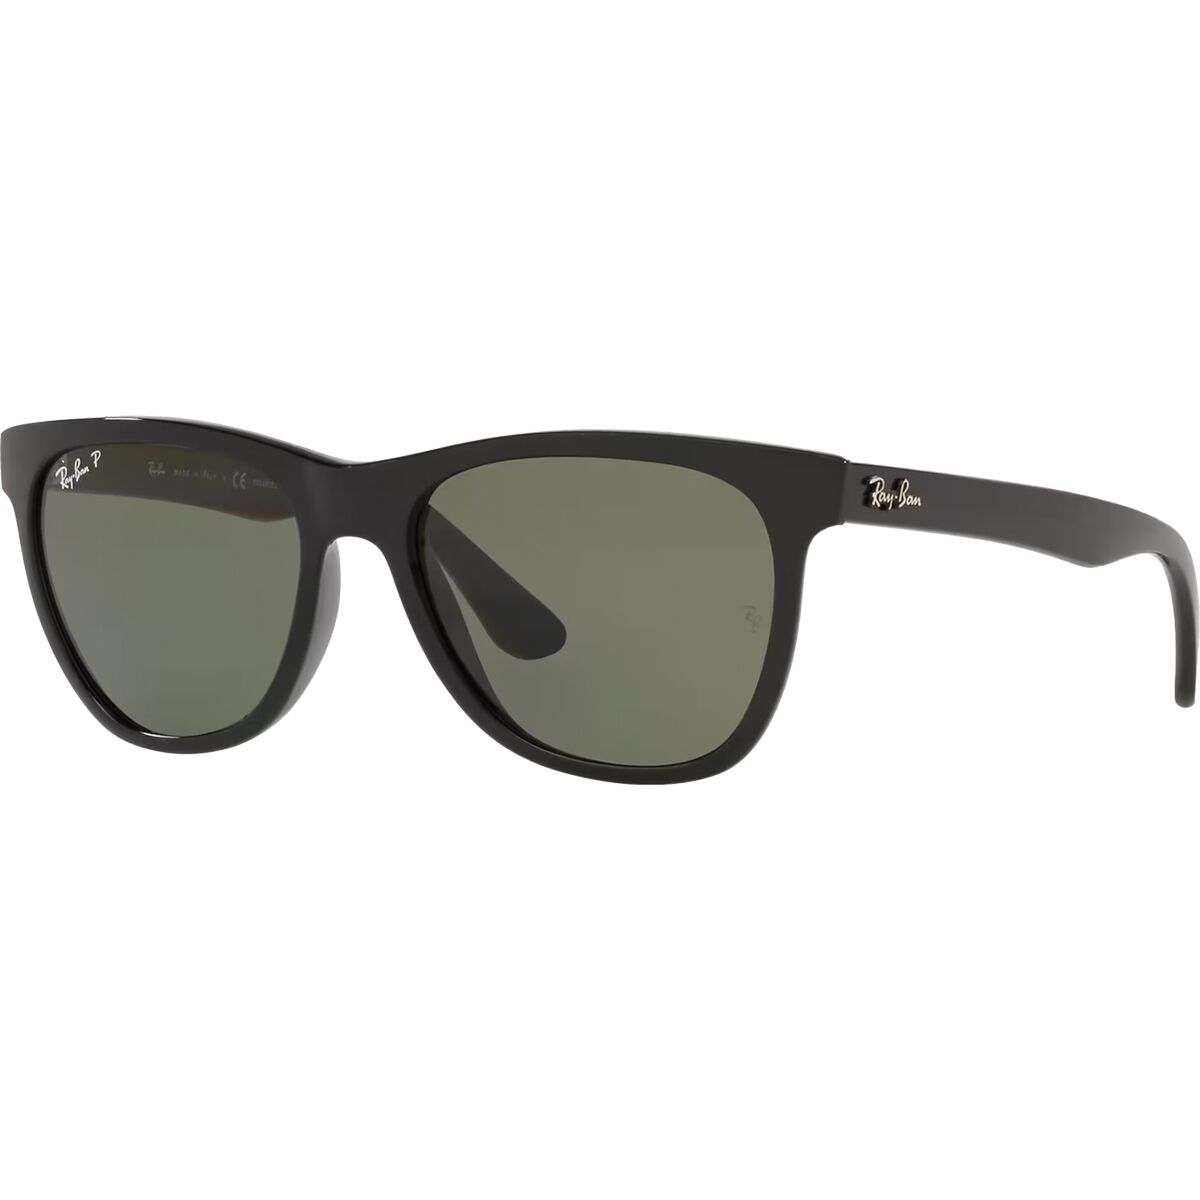 RB4184 Sunglasses - Accessories